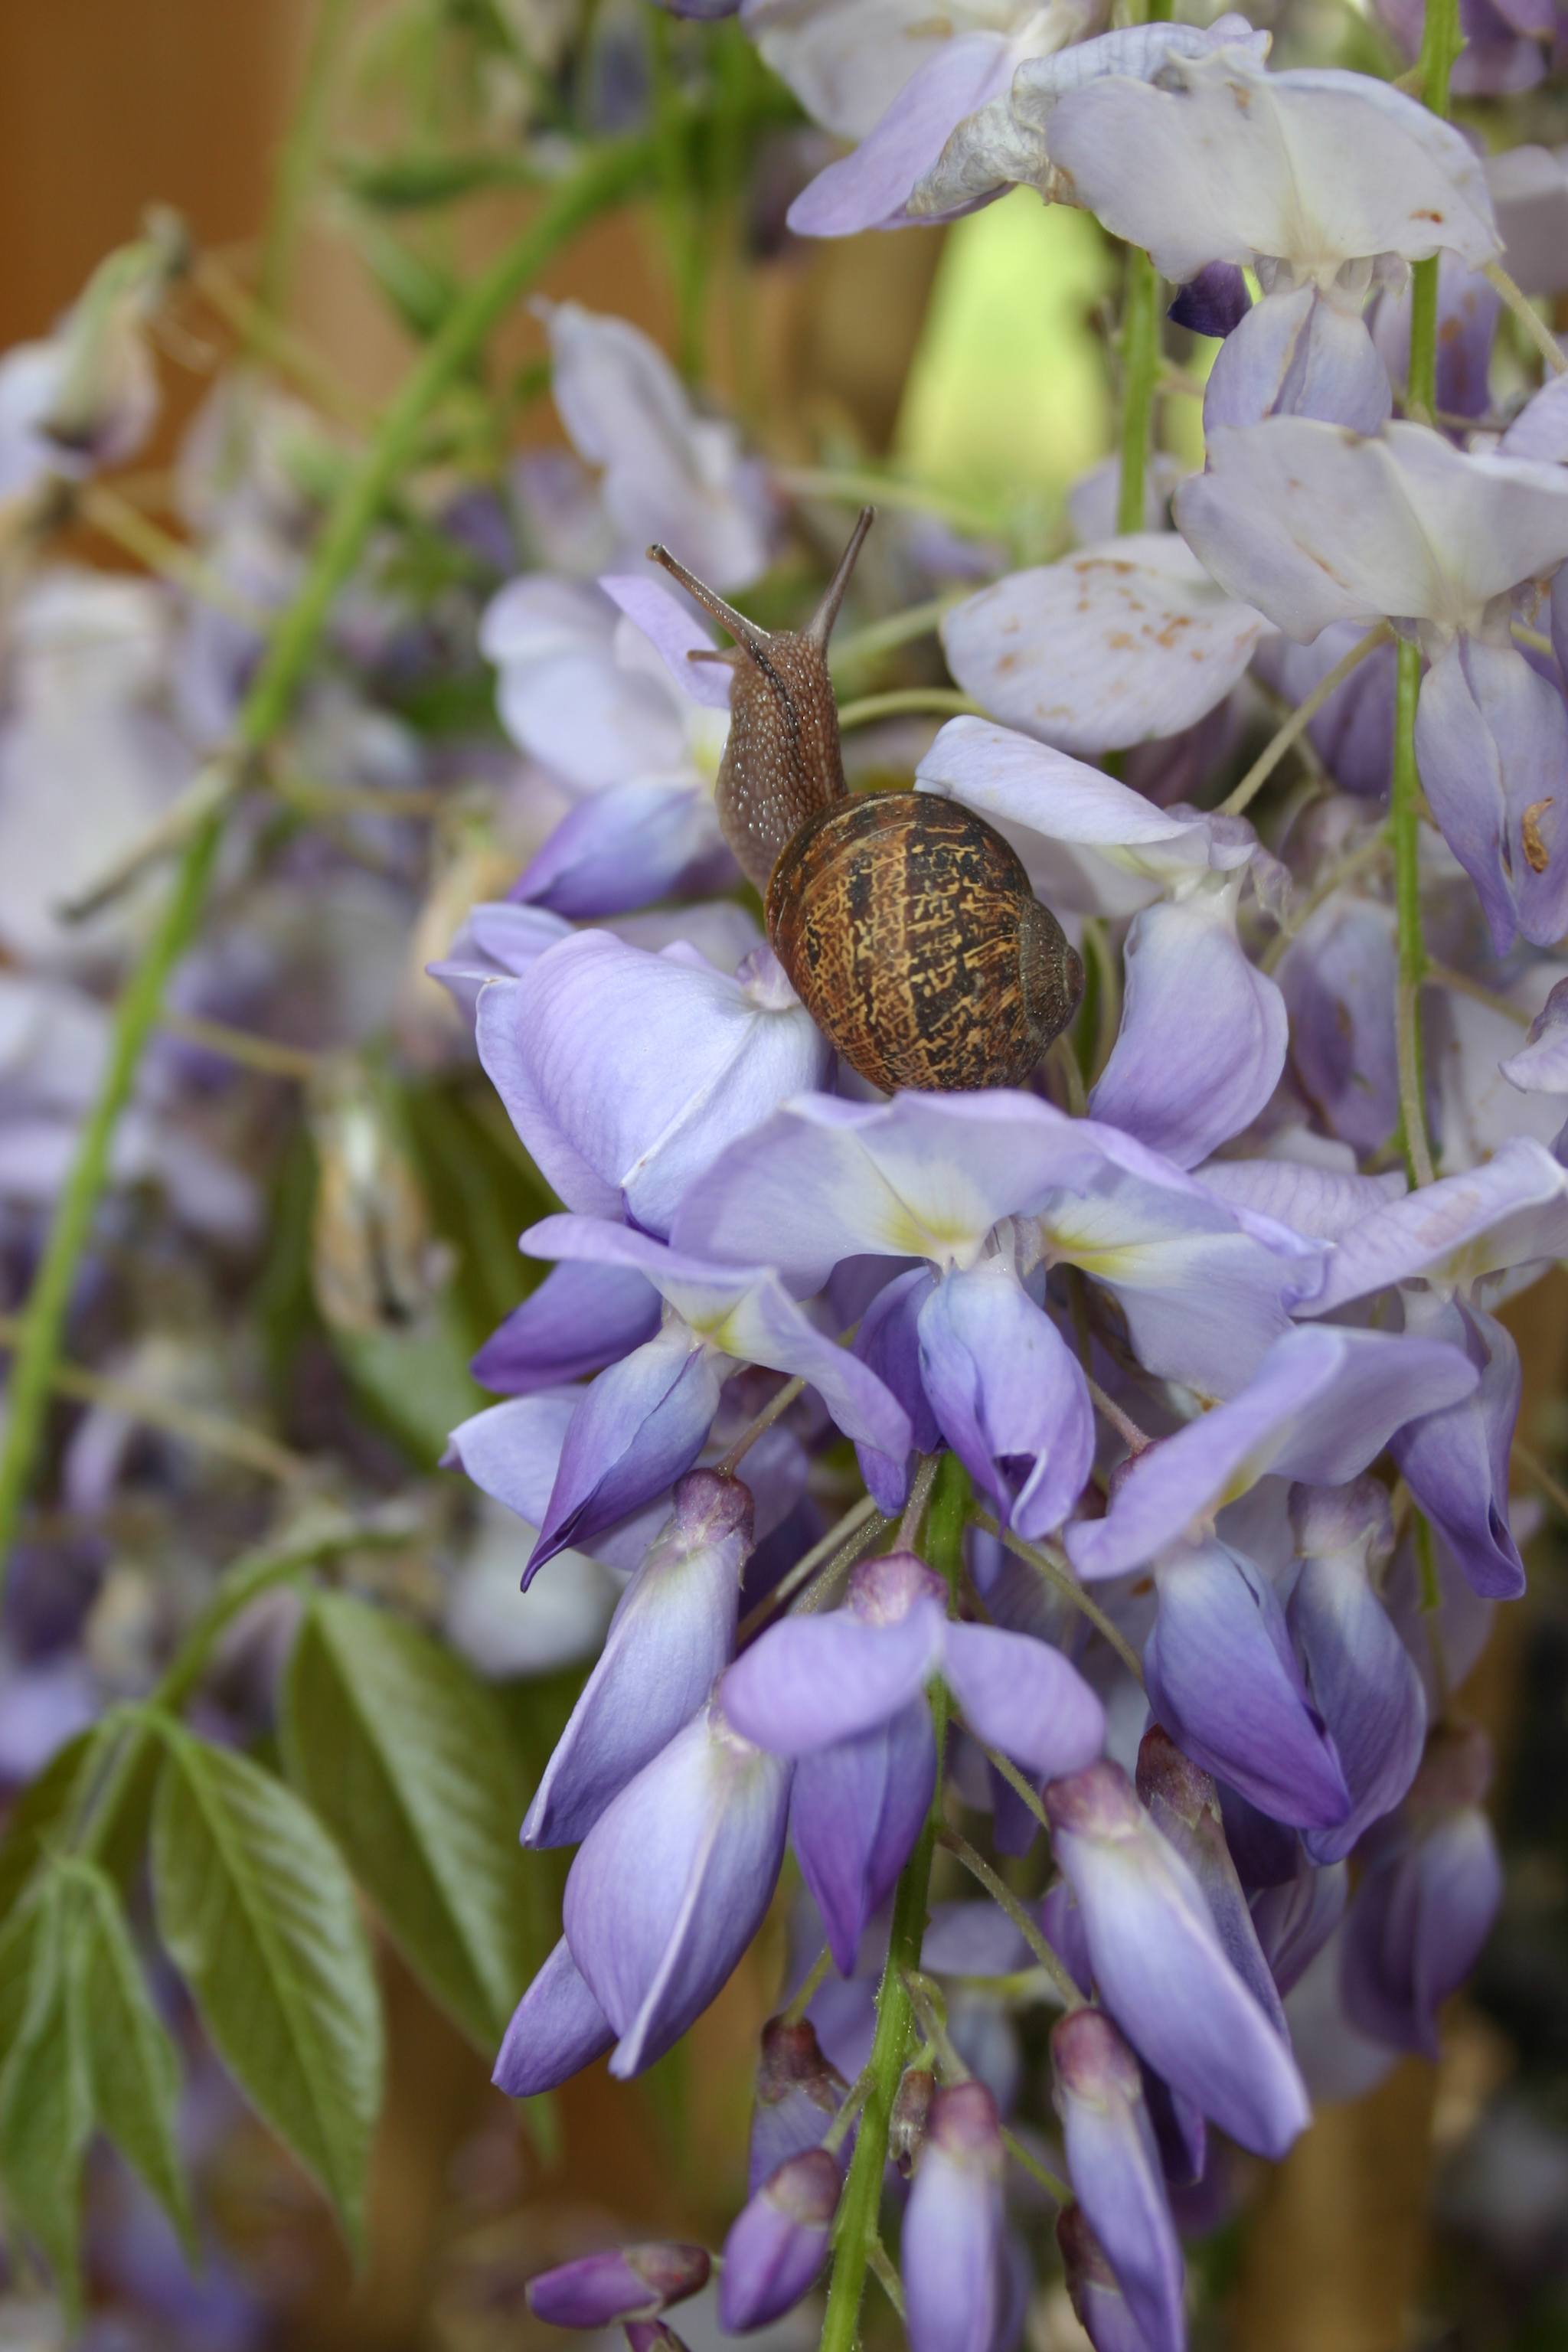 A snail checks out the purple wisteria flowers.